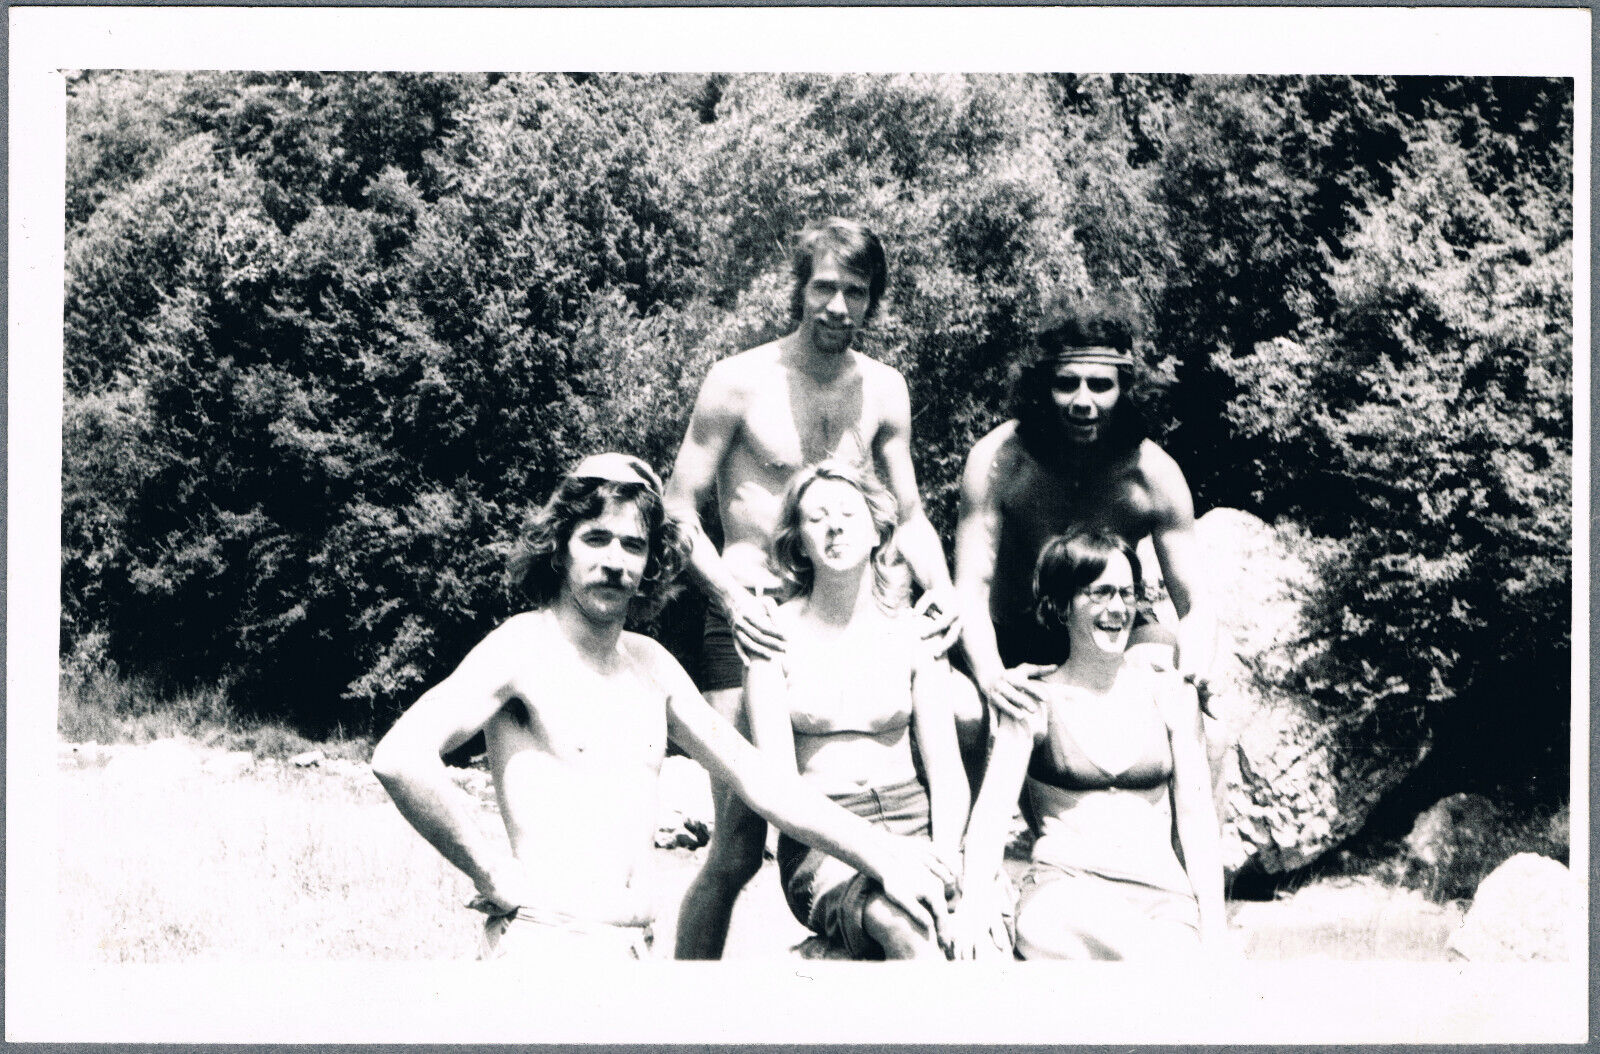 1980s Affectionate Men Trunks Bulge Pretty Women Bikini Beach Gay int Vint Photo